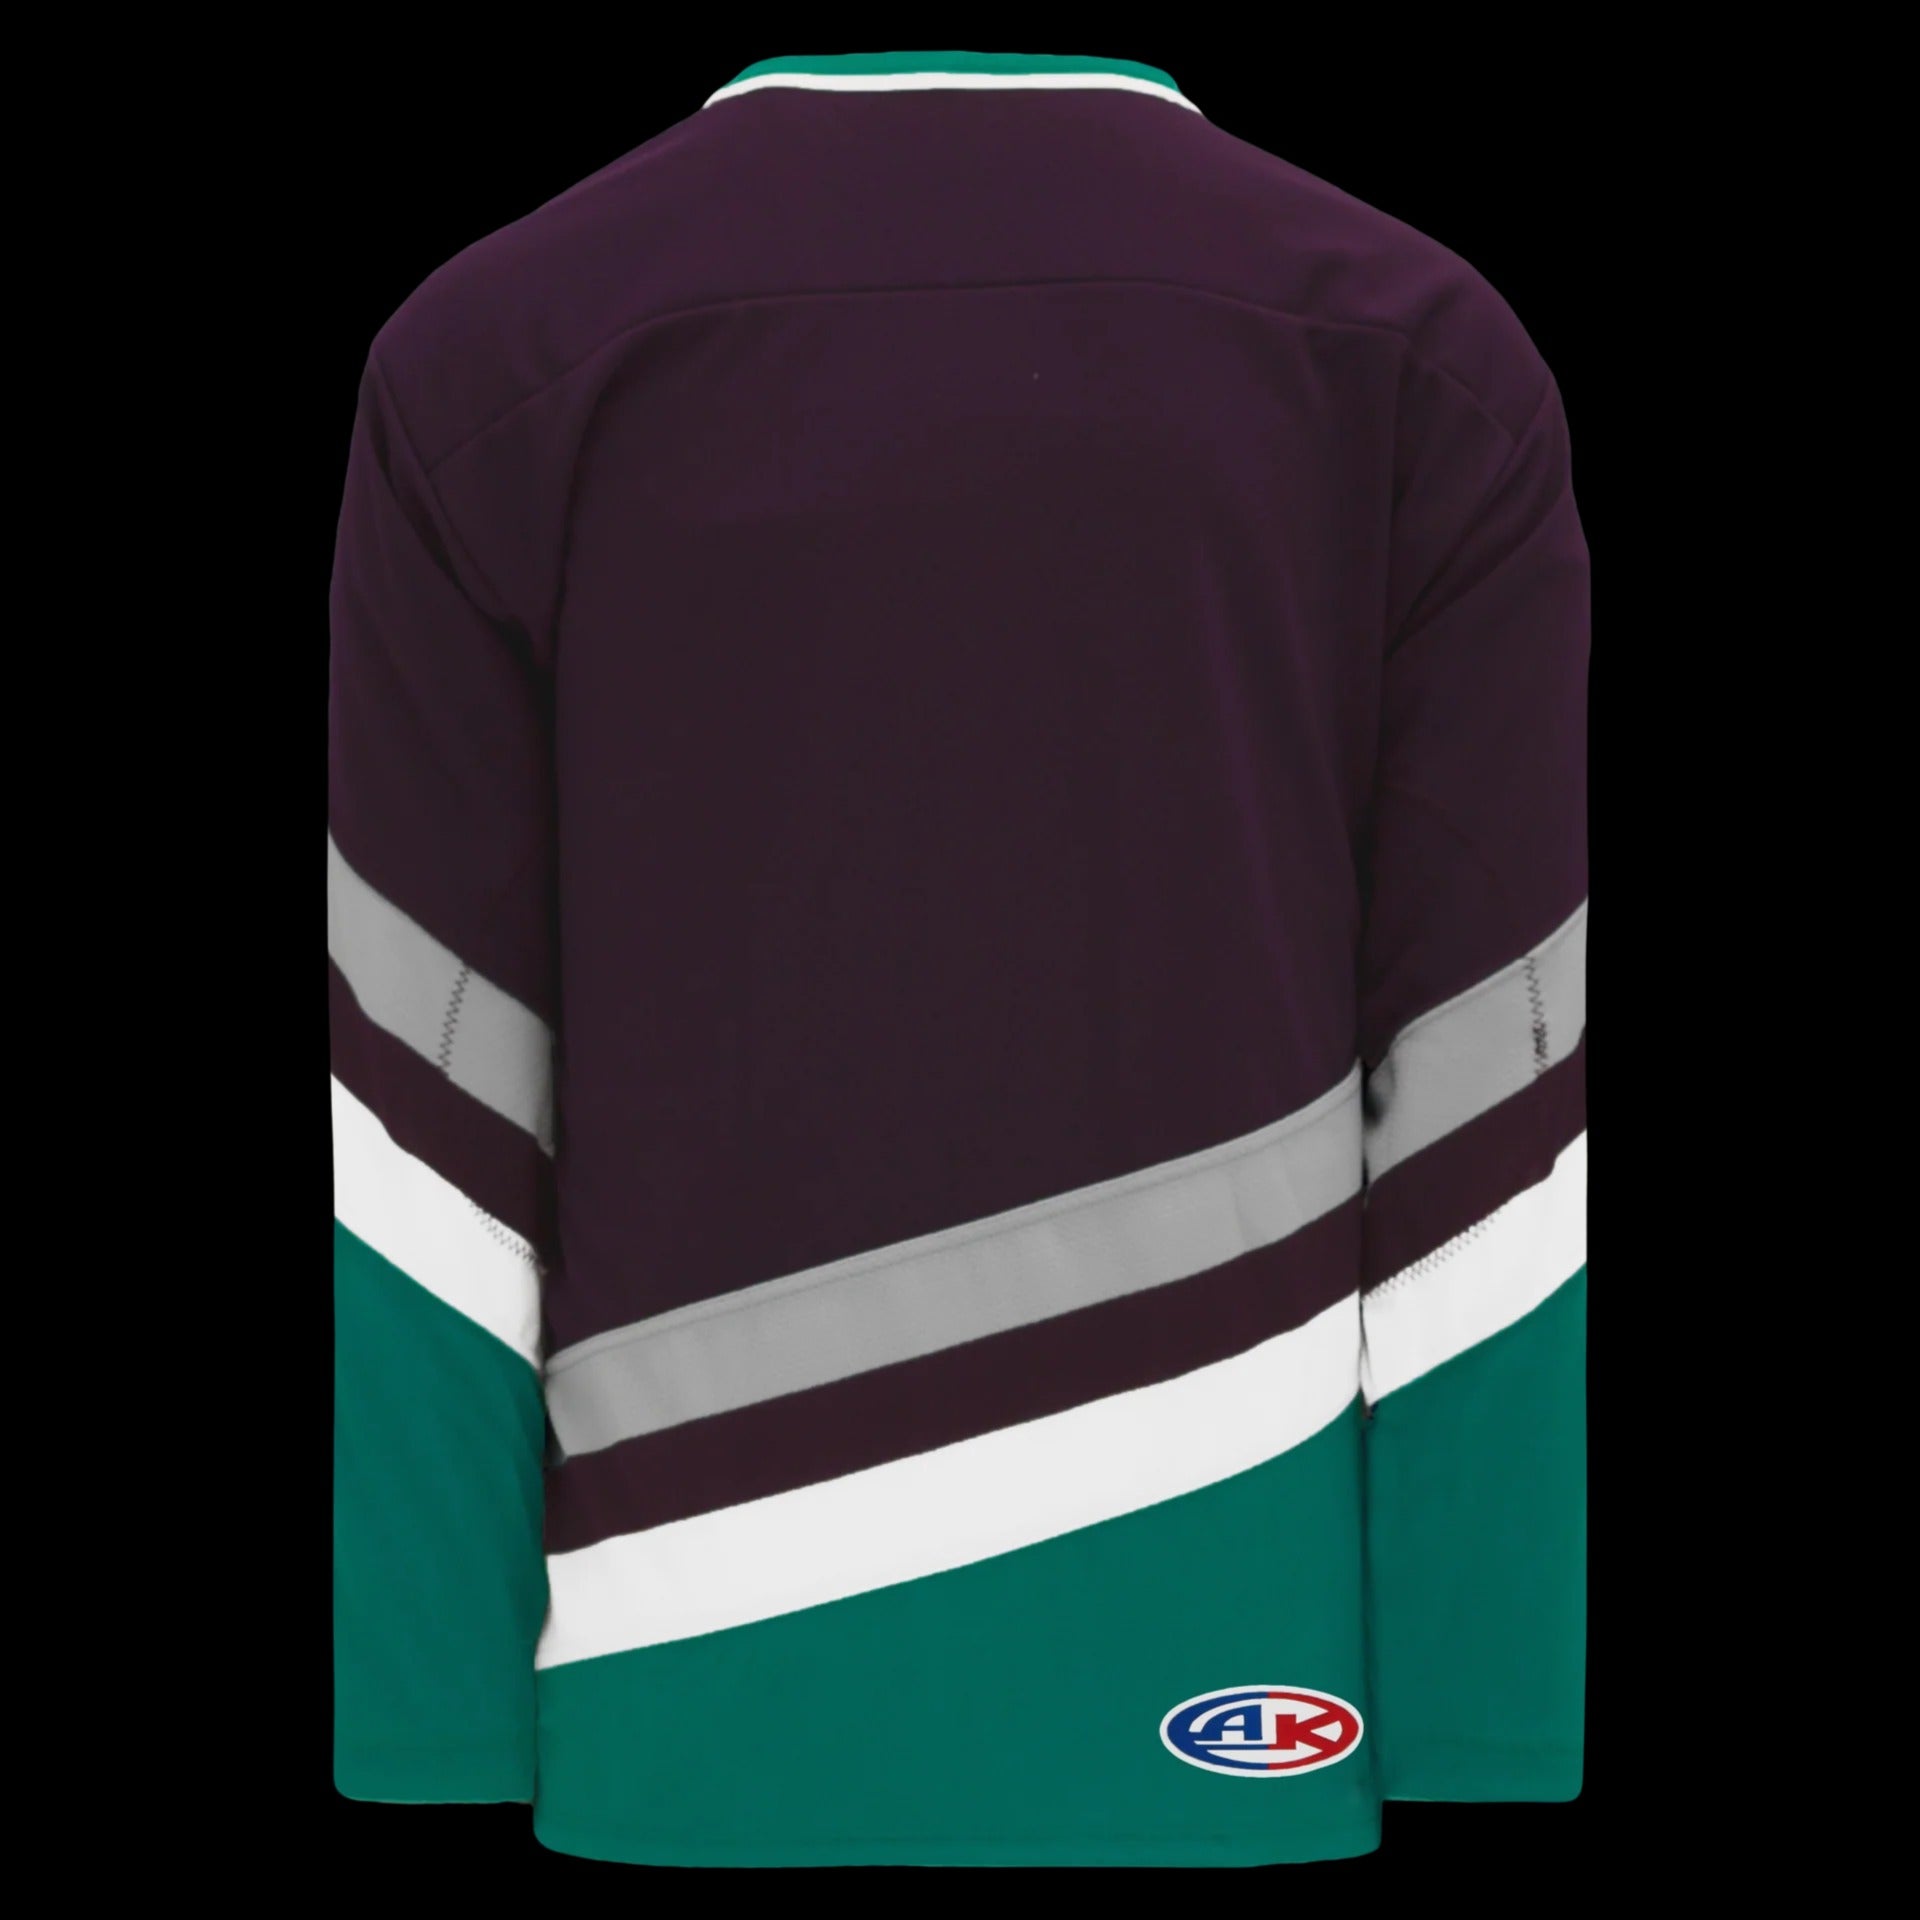 FS] Koho Mighty Ducks Eggplant Blank Jersey New With Tags (Large) - $90 +  shipping : r/hockeyjerseys